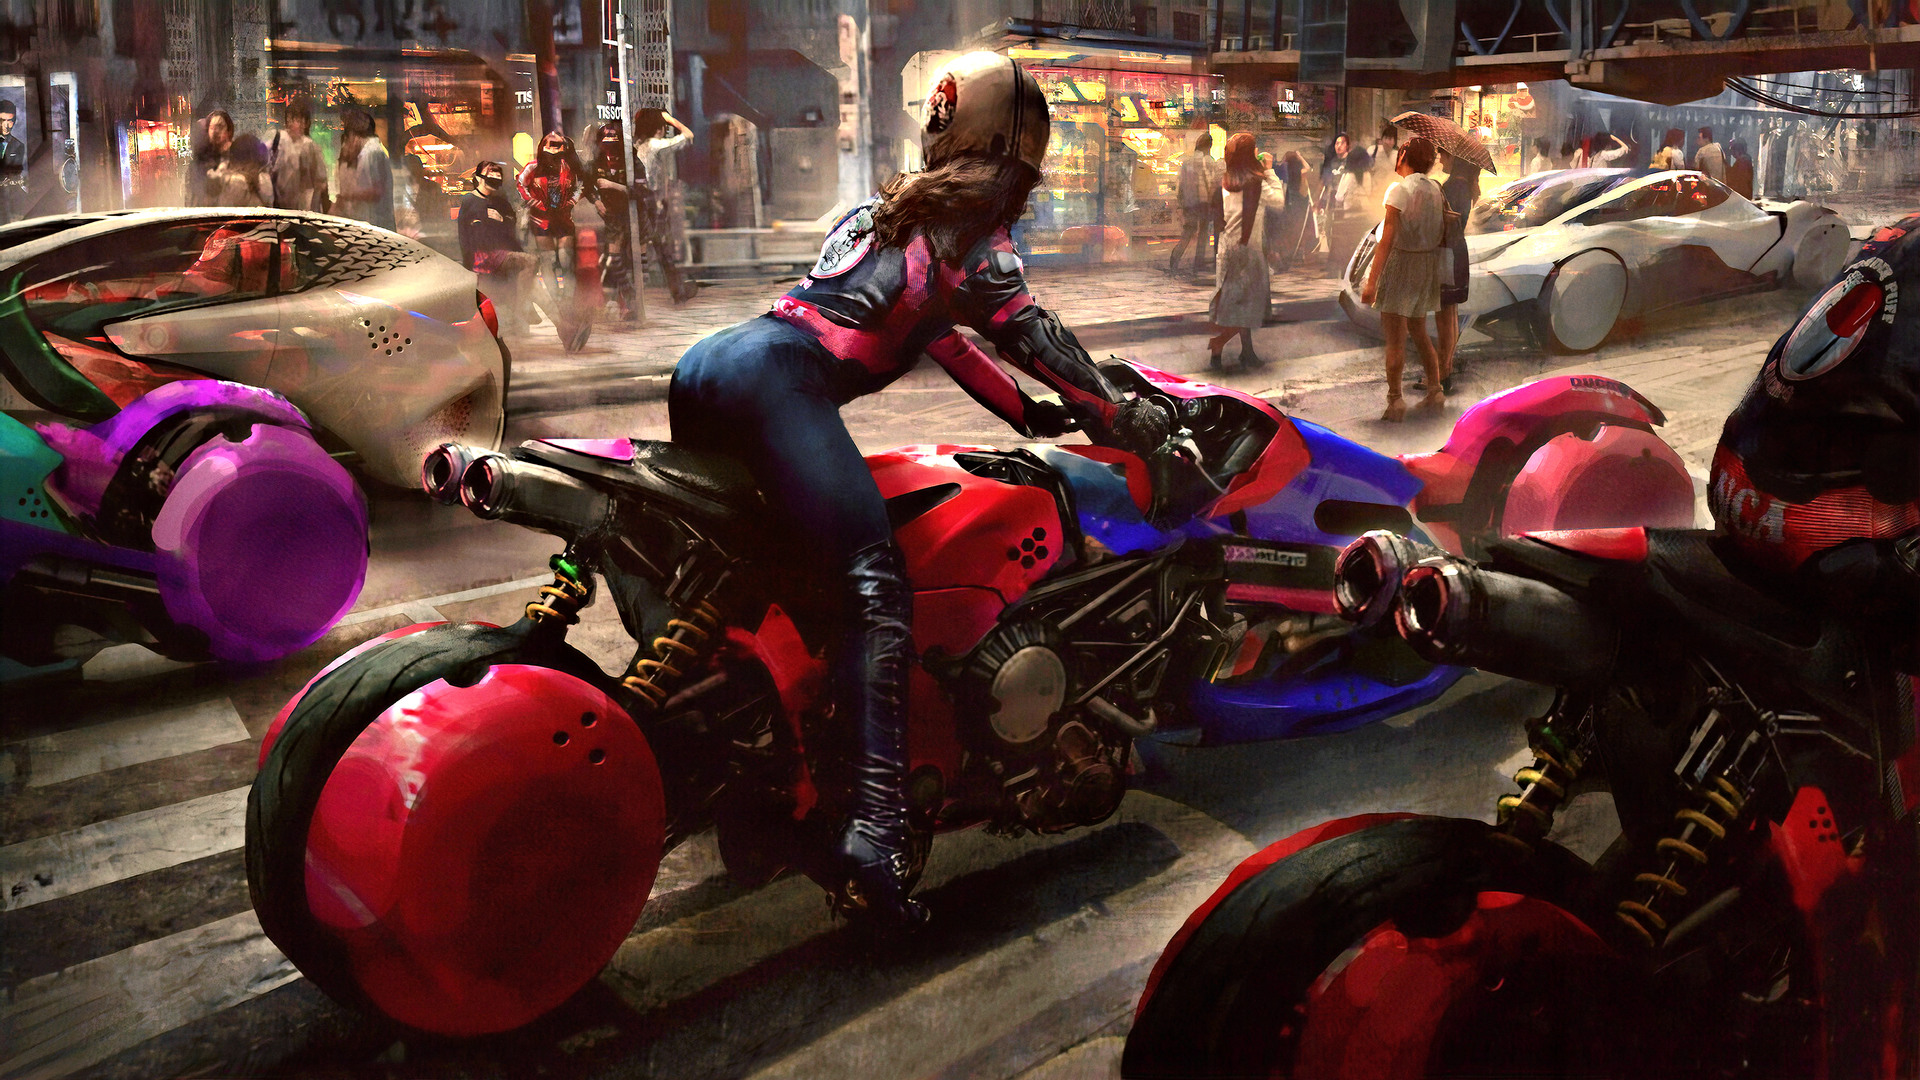 cyberpunk-biker-girl-digital-art-motorcycle-scifi-uhdpaper.com-hd-4.2030.jpg